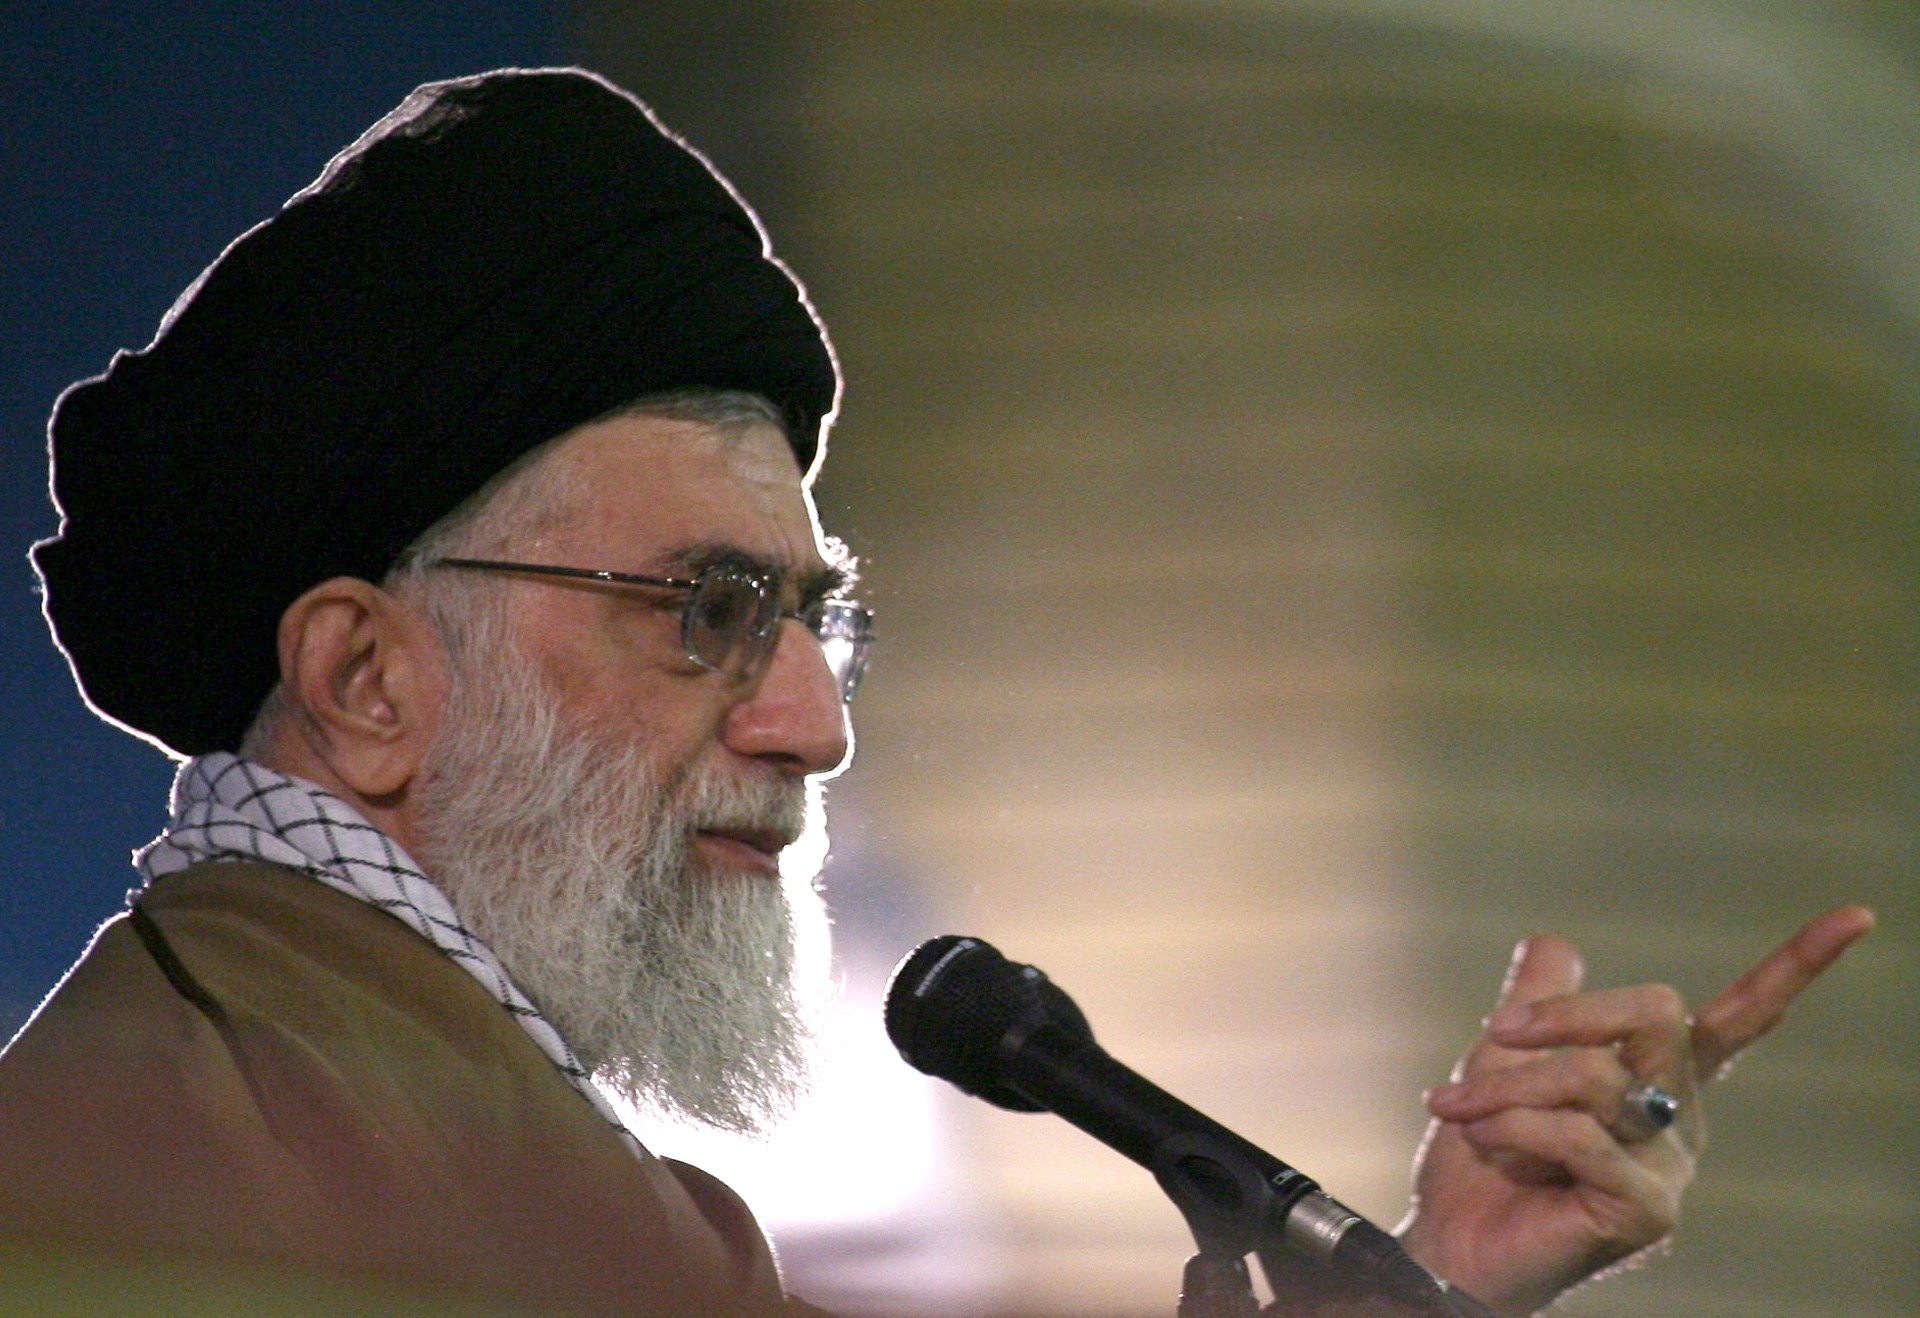 Iran’s Khamenei says US wants to keep Ukraine war going